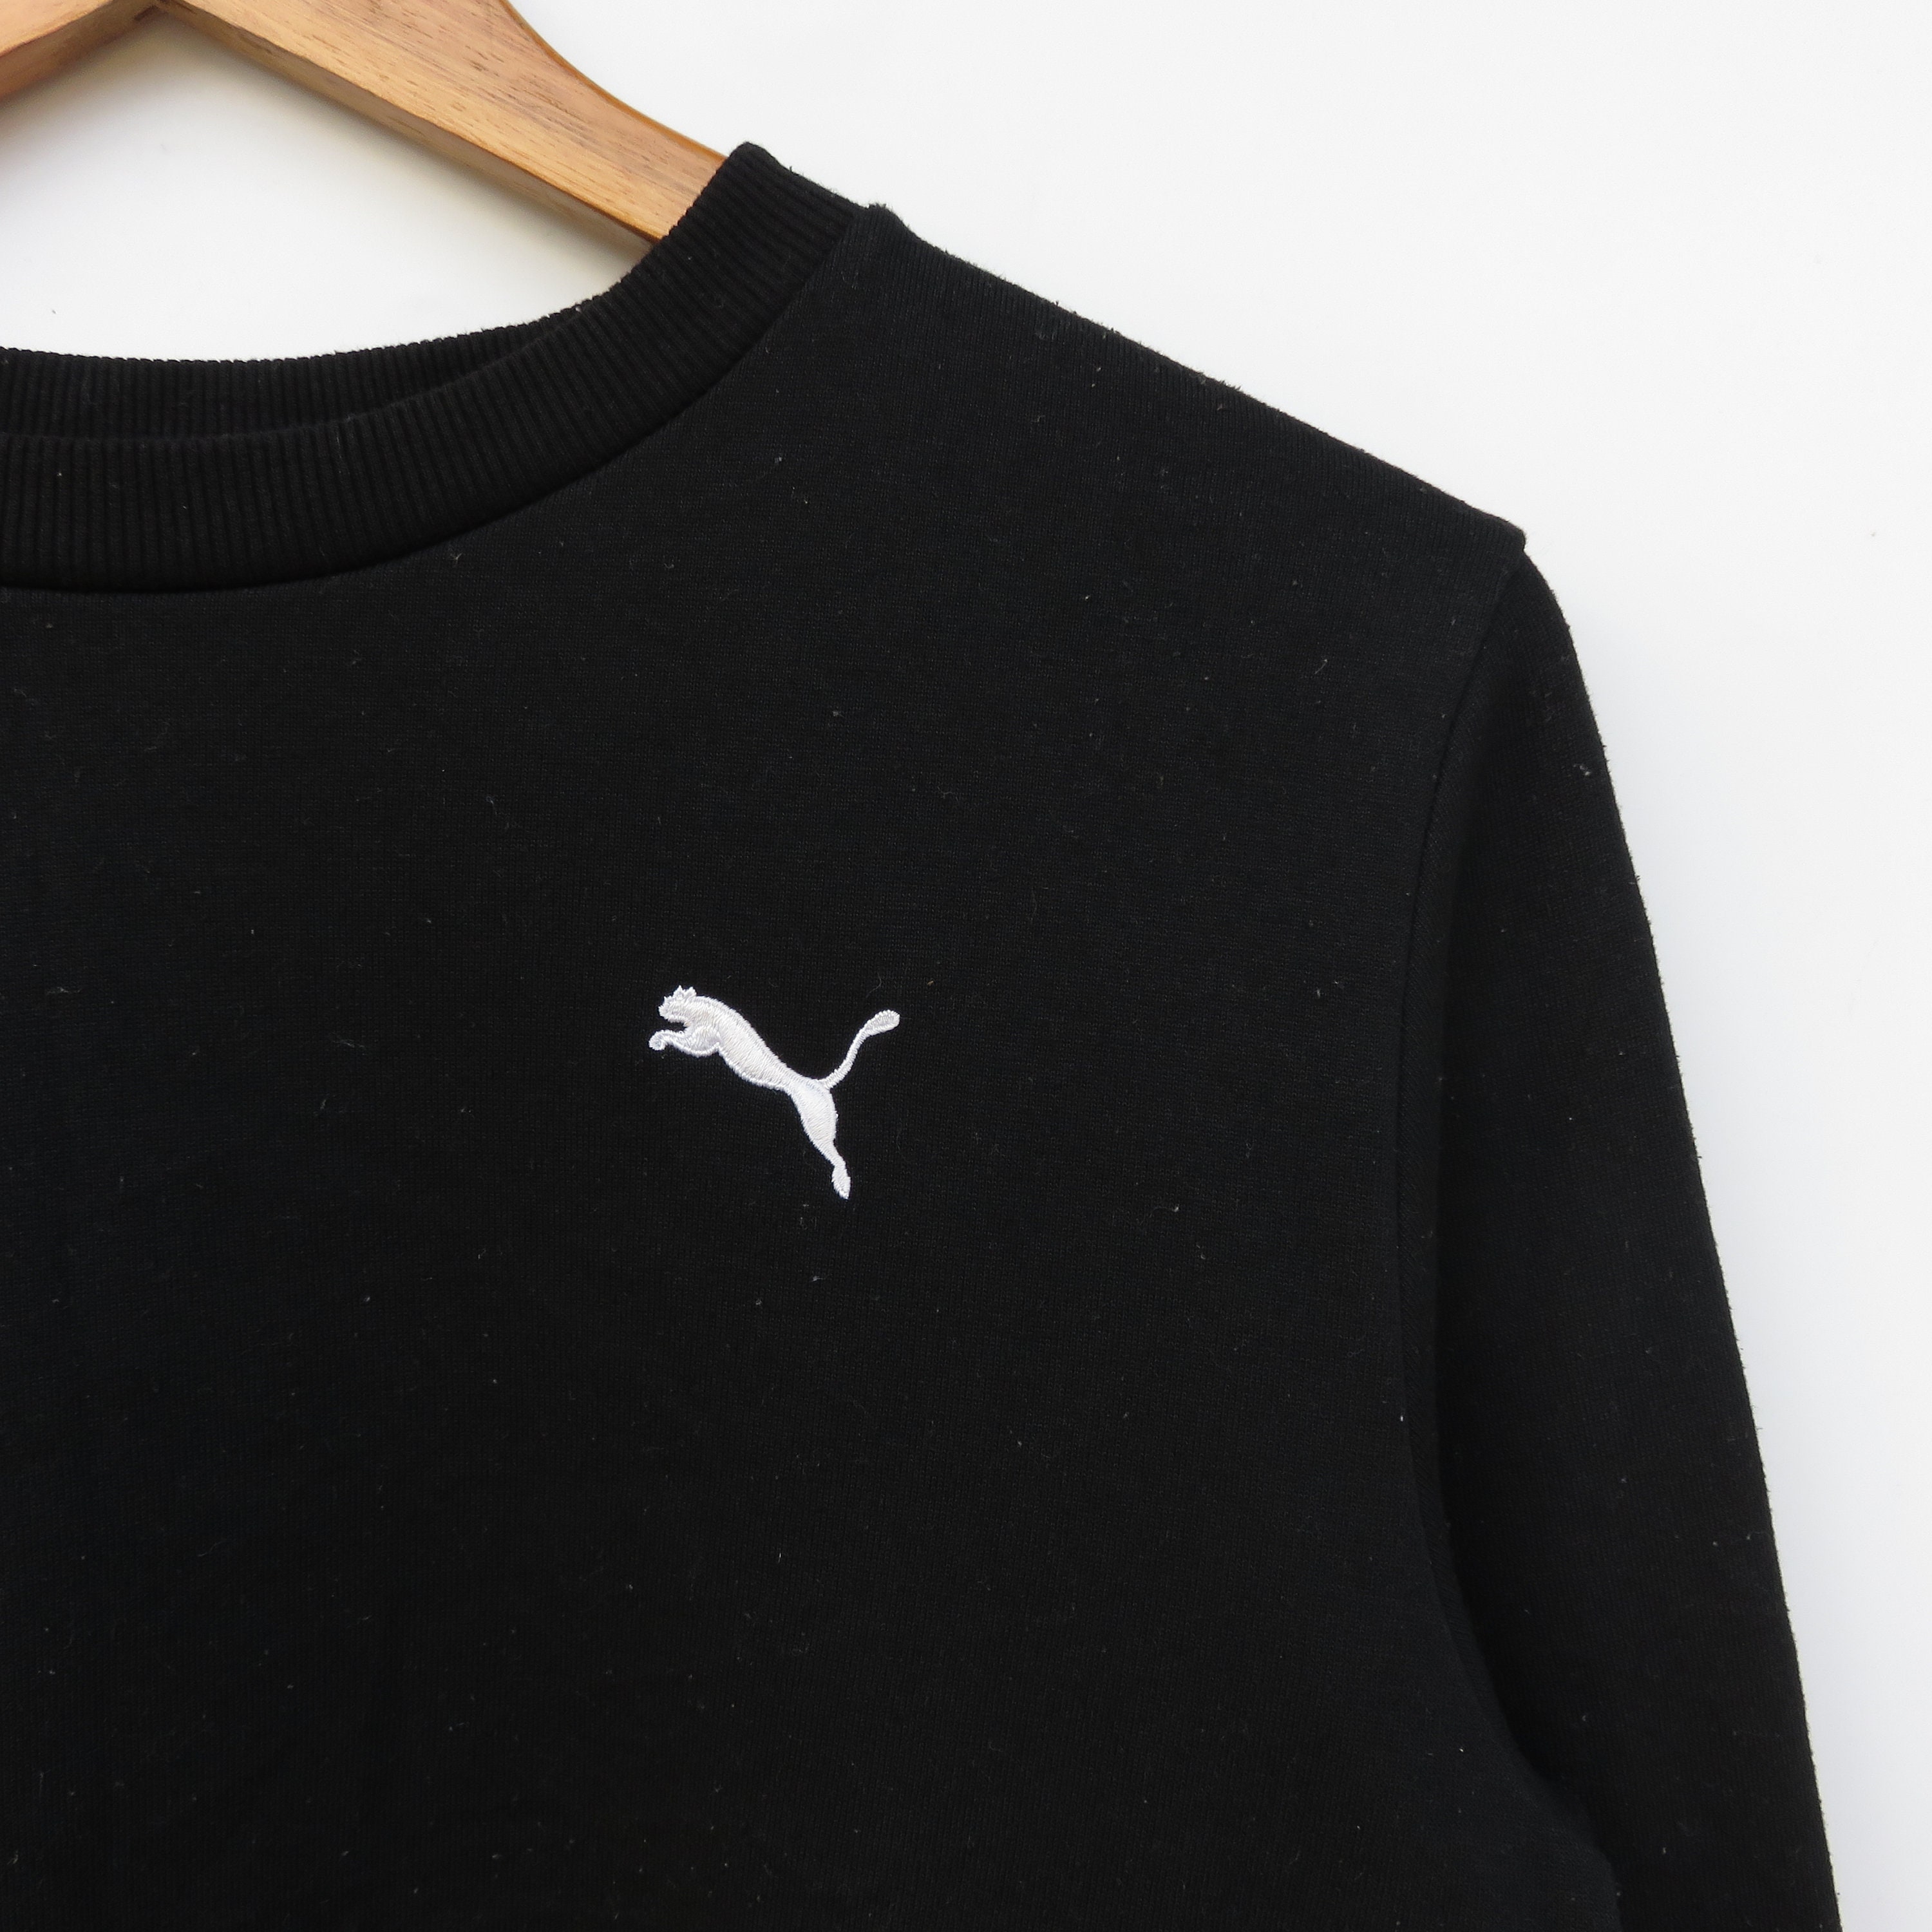 Puma Embroidery Plain Small Logo Black Sweatshirt Sweater | Etsy